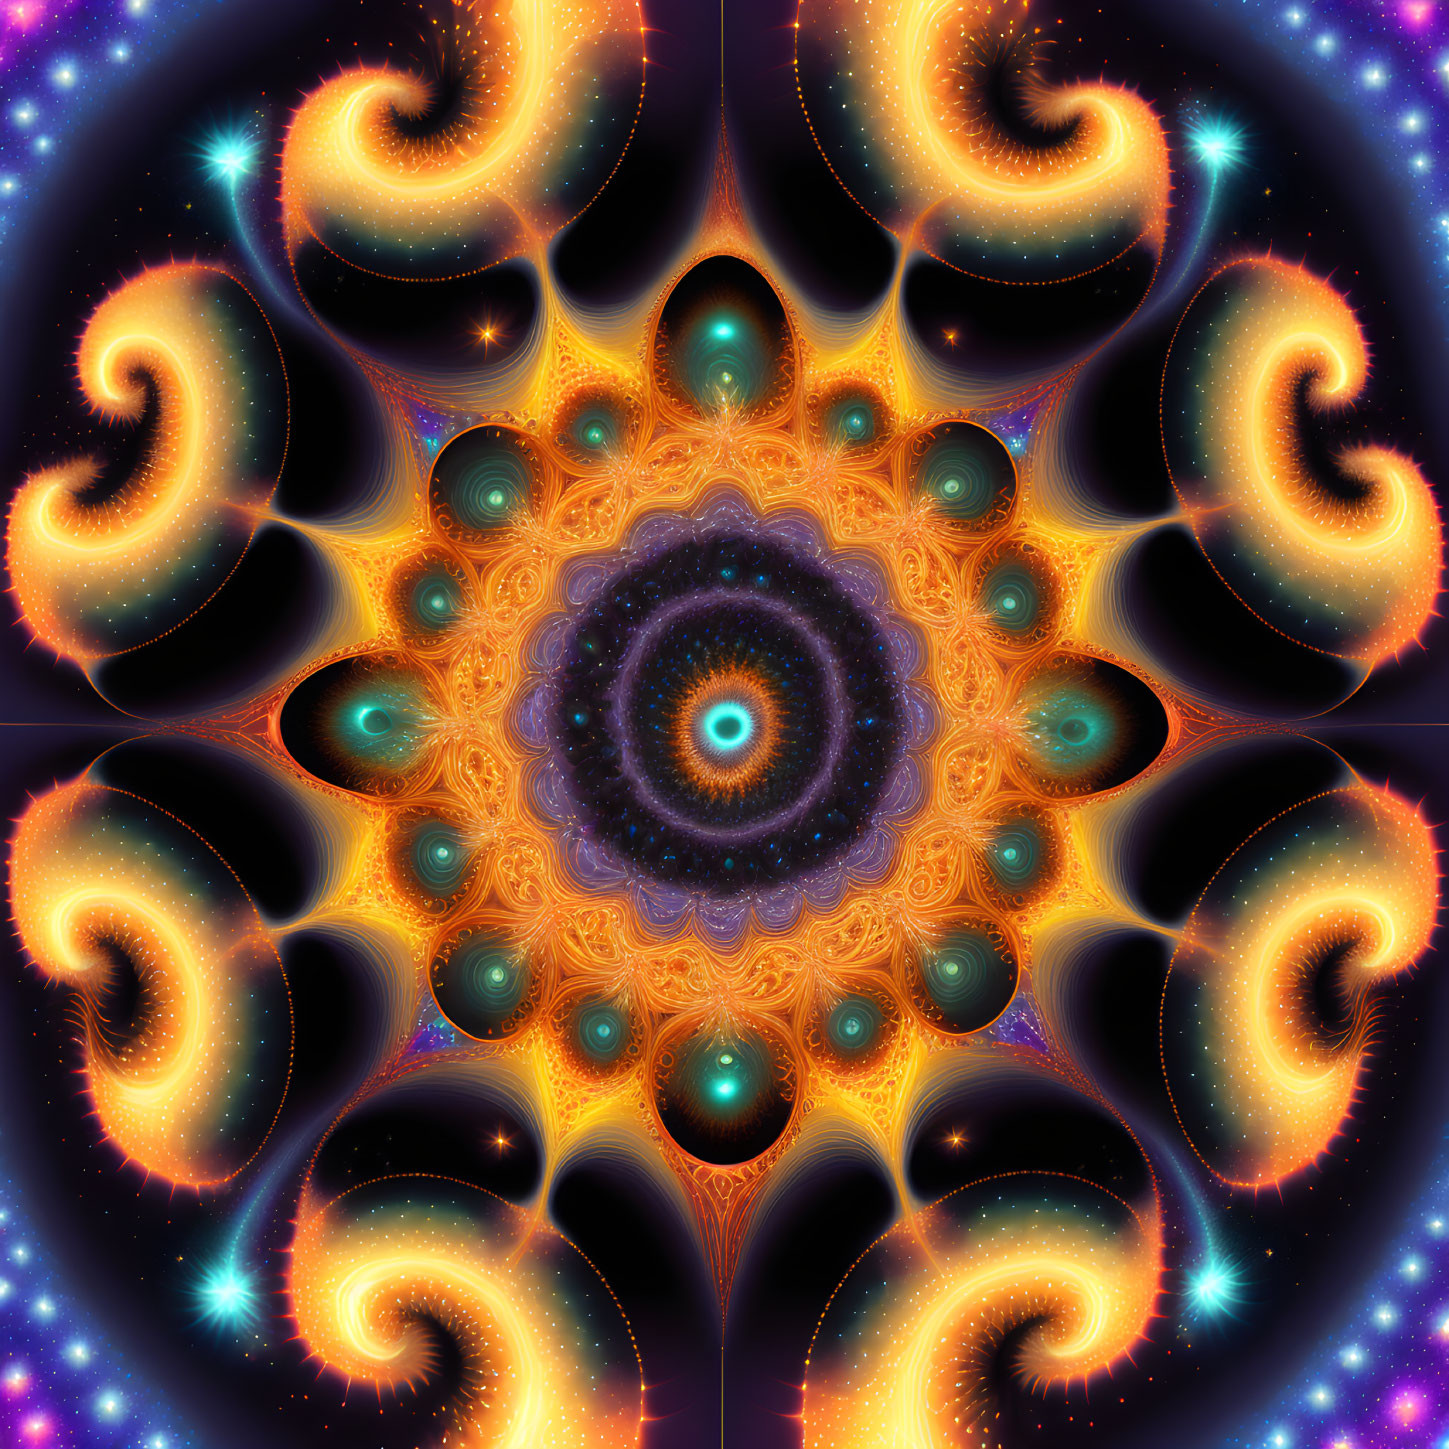 Colorful Symmetrical Mandala Fractal with Spiral Motifs